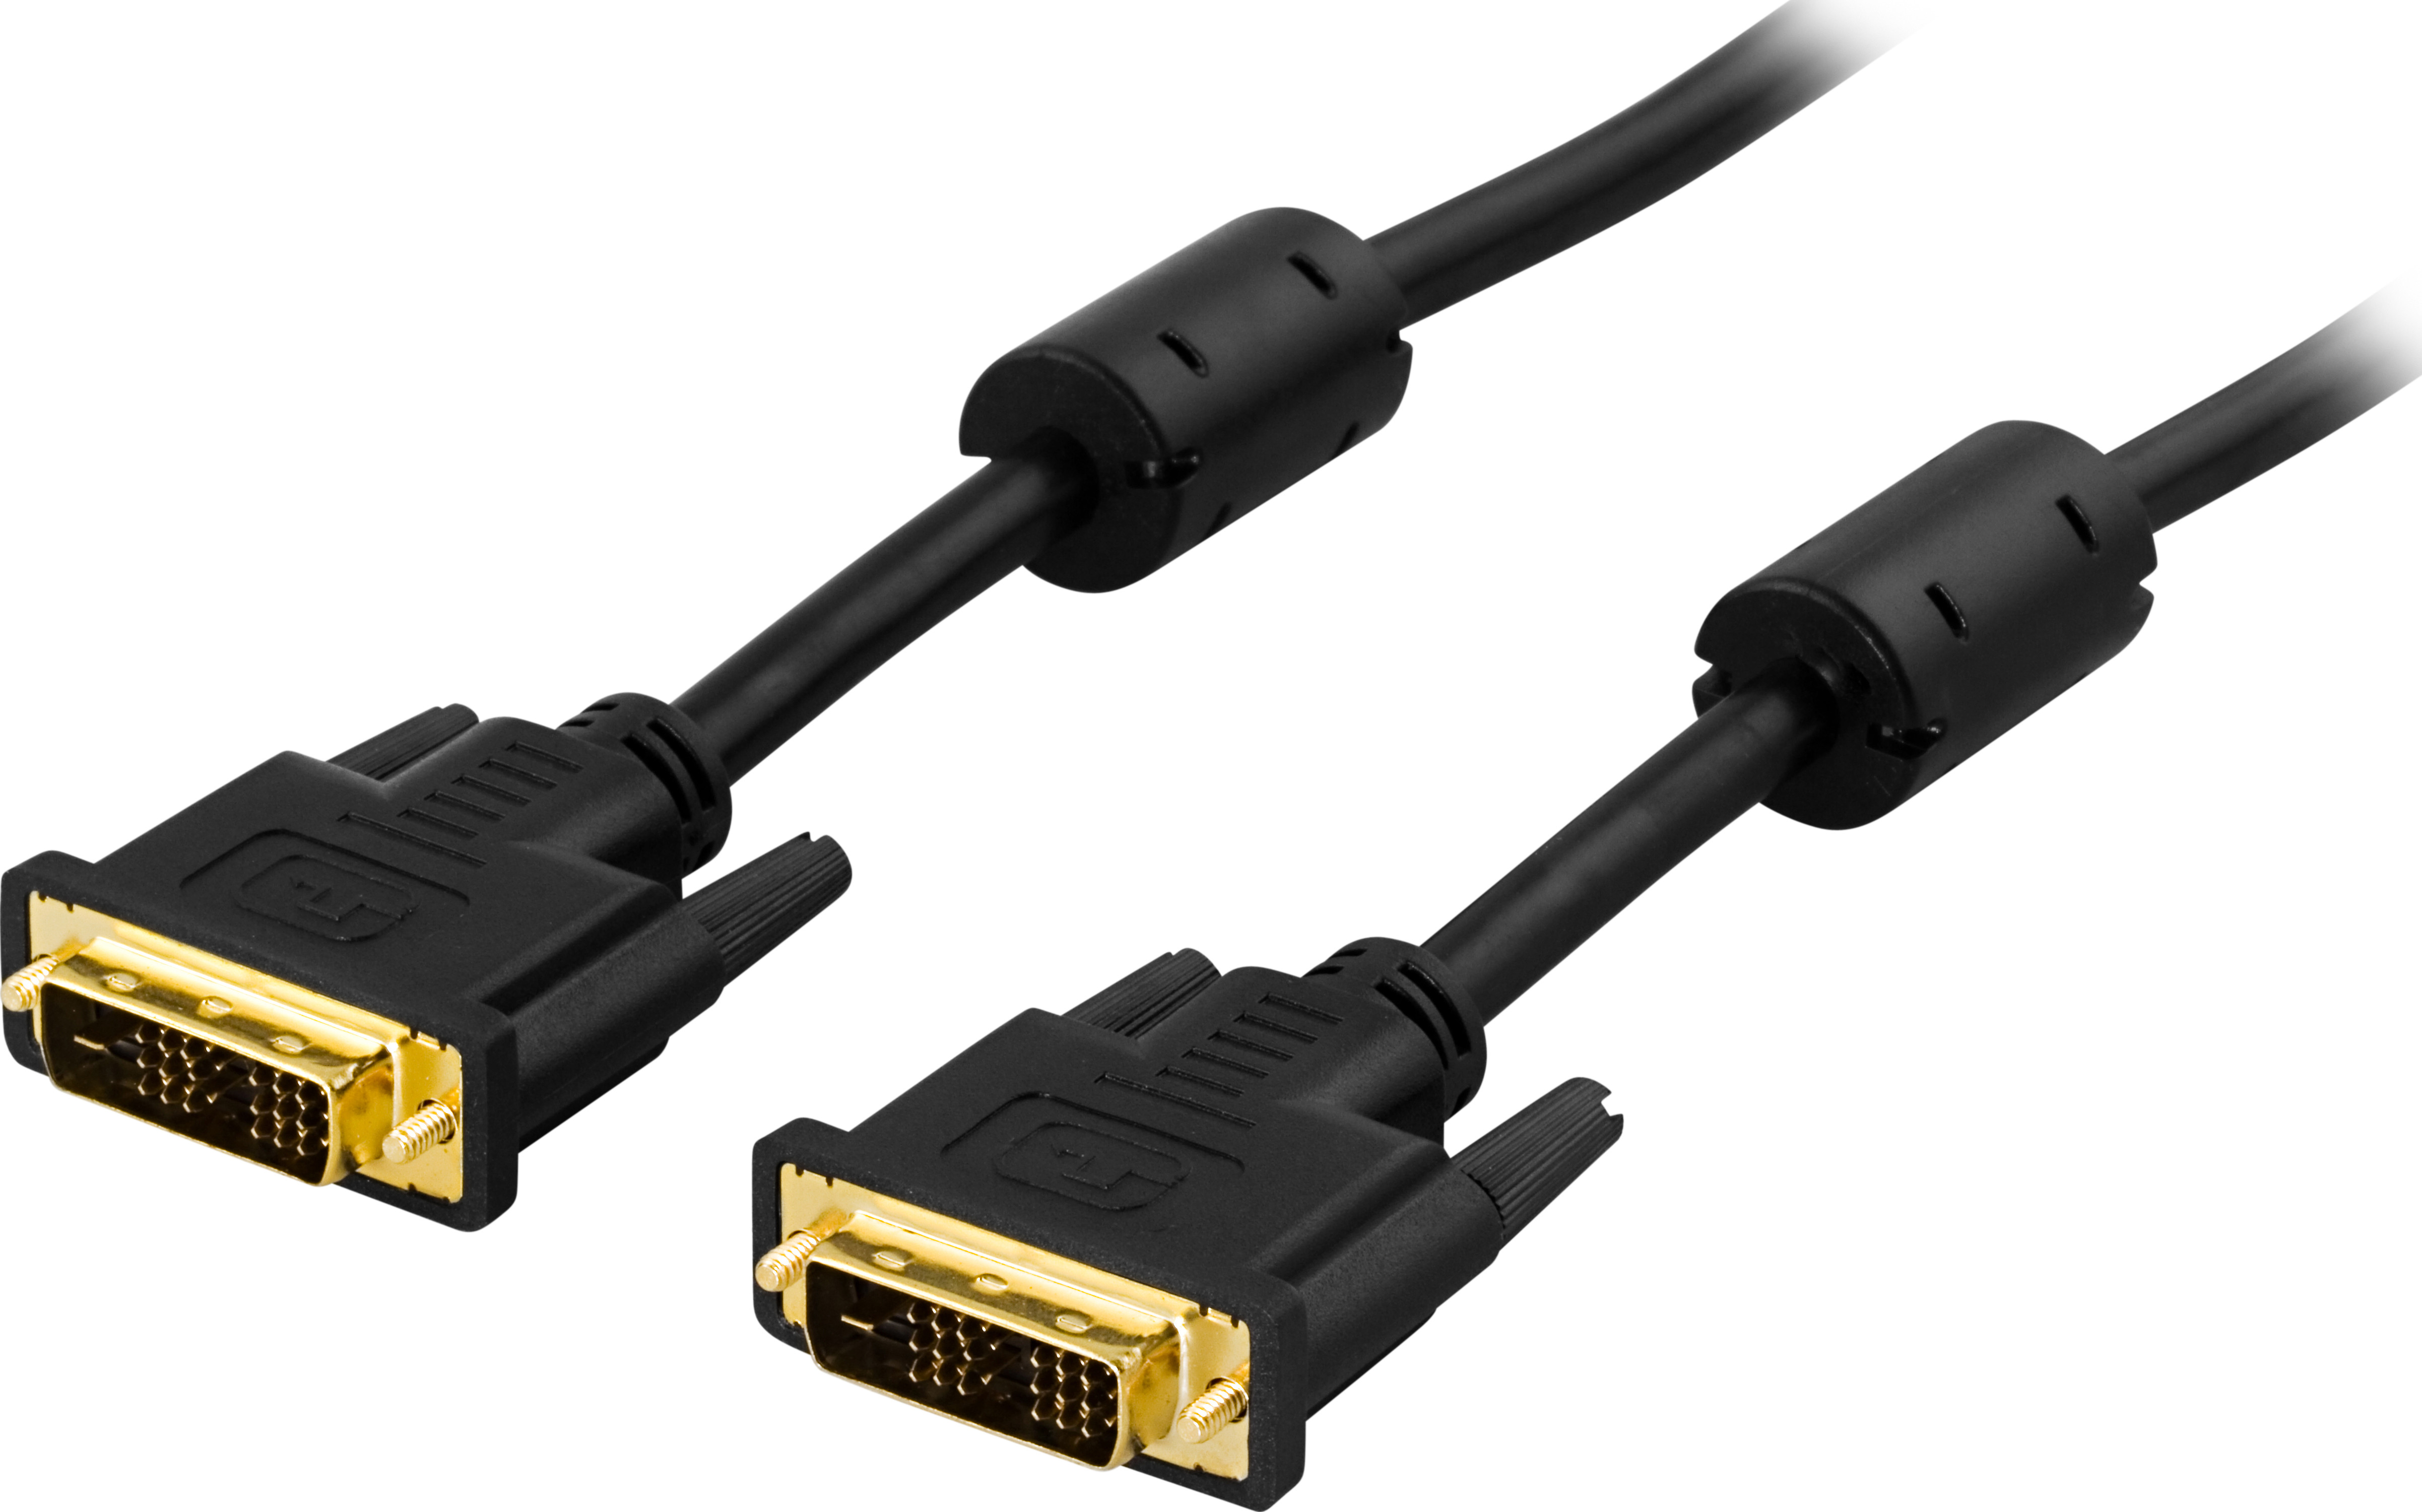 DVI Single Link monitor cable DELTACO DVI-D 18 + 1-pin ha-ha, gold-plated connectors, conductor of pure copper, 5m, black / VE011-C